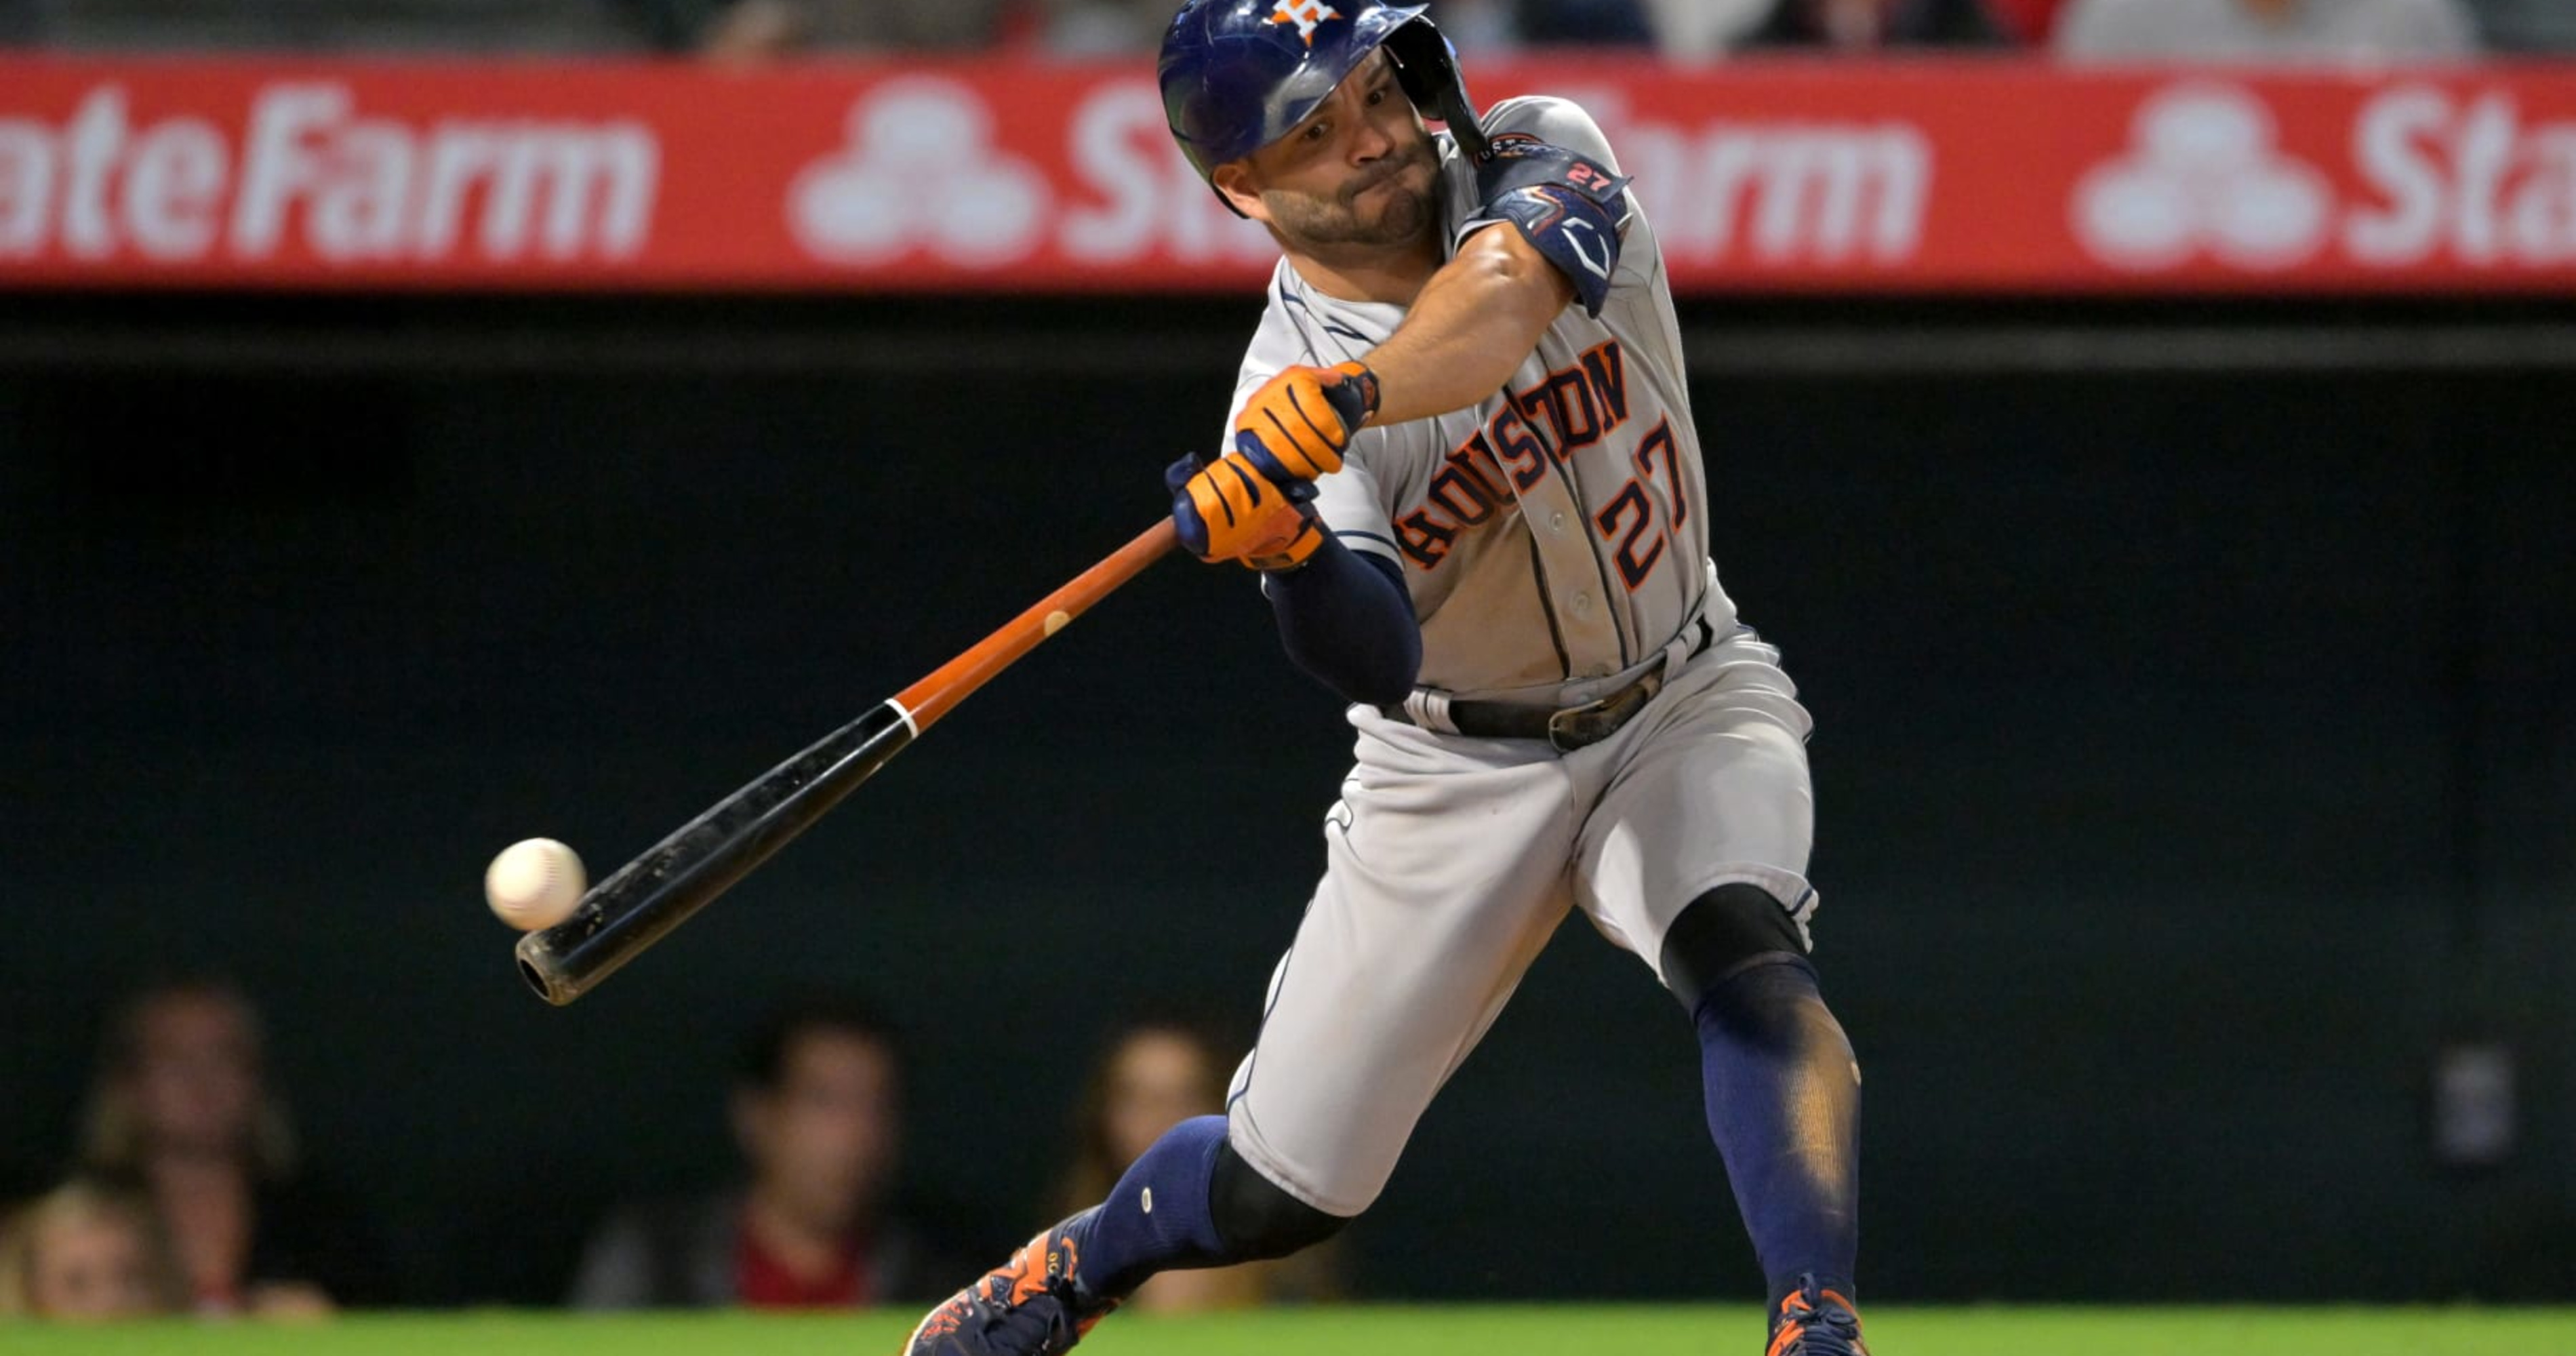 Astros star José Altuve hits 3 home runs in 3 innings in blowout